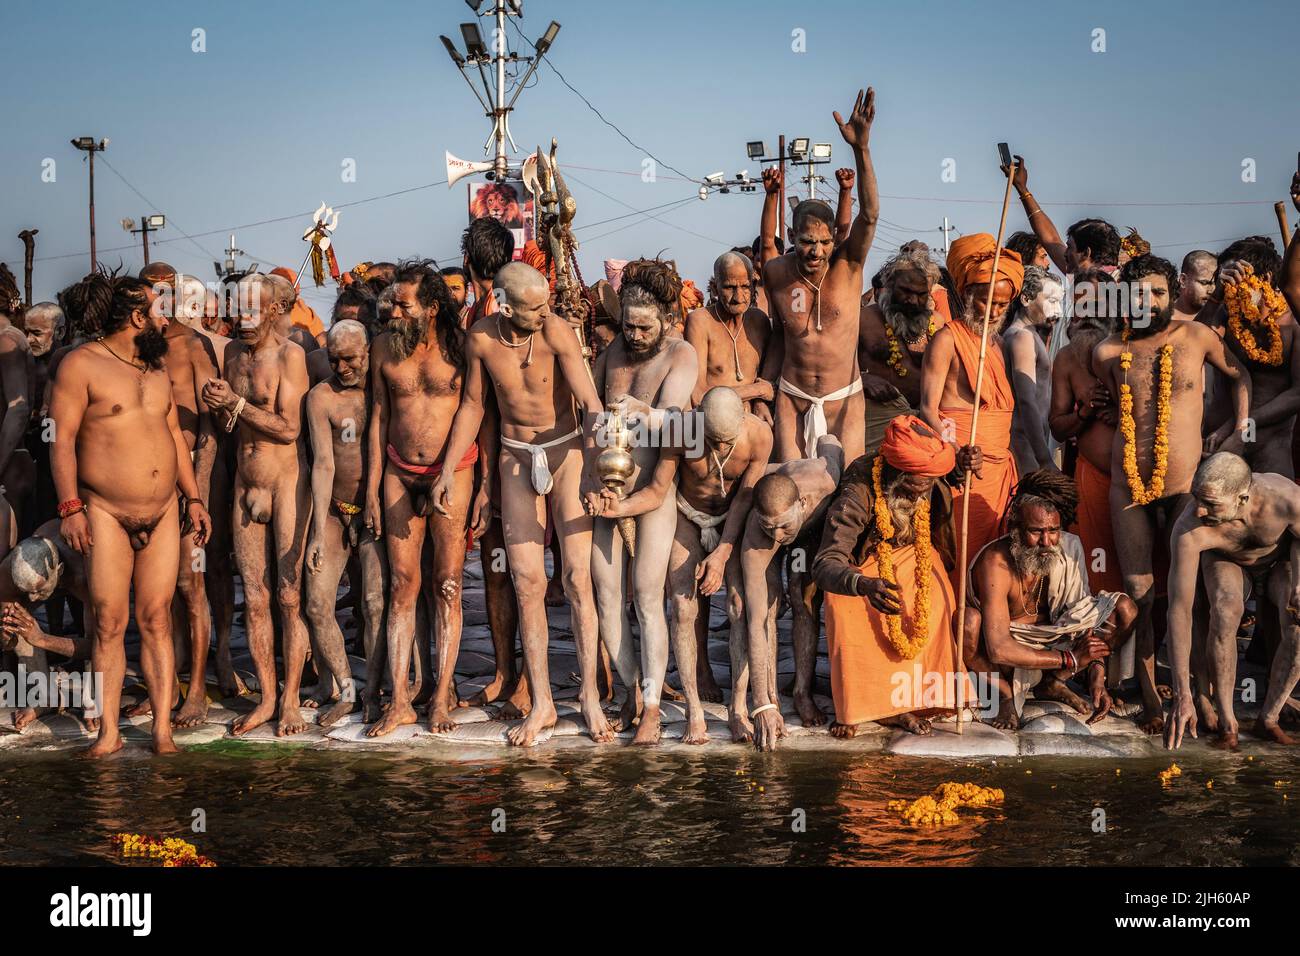 Naga Sadhus (uomini santi indiani) si prepara ad entrare nelle acque sacre al Sangam, Kumbh Mela Festival ad Allahabad (Prayagraj), Utar Pradesh, India. Foto Stock